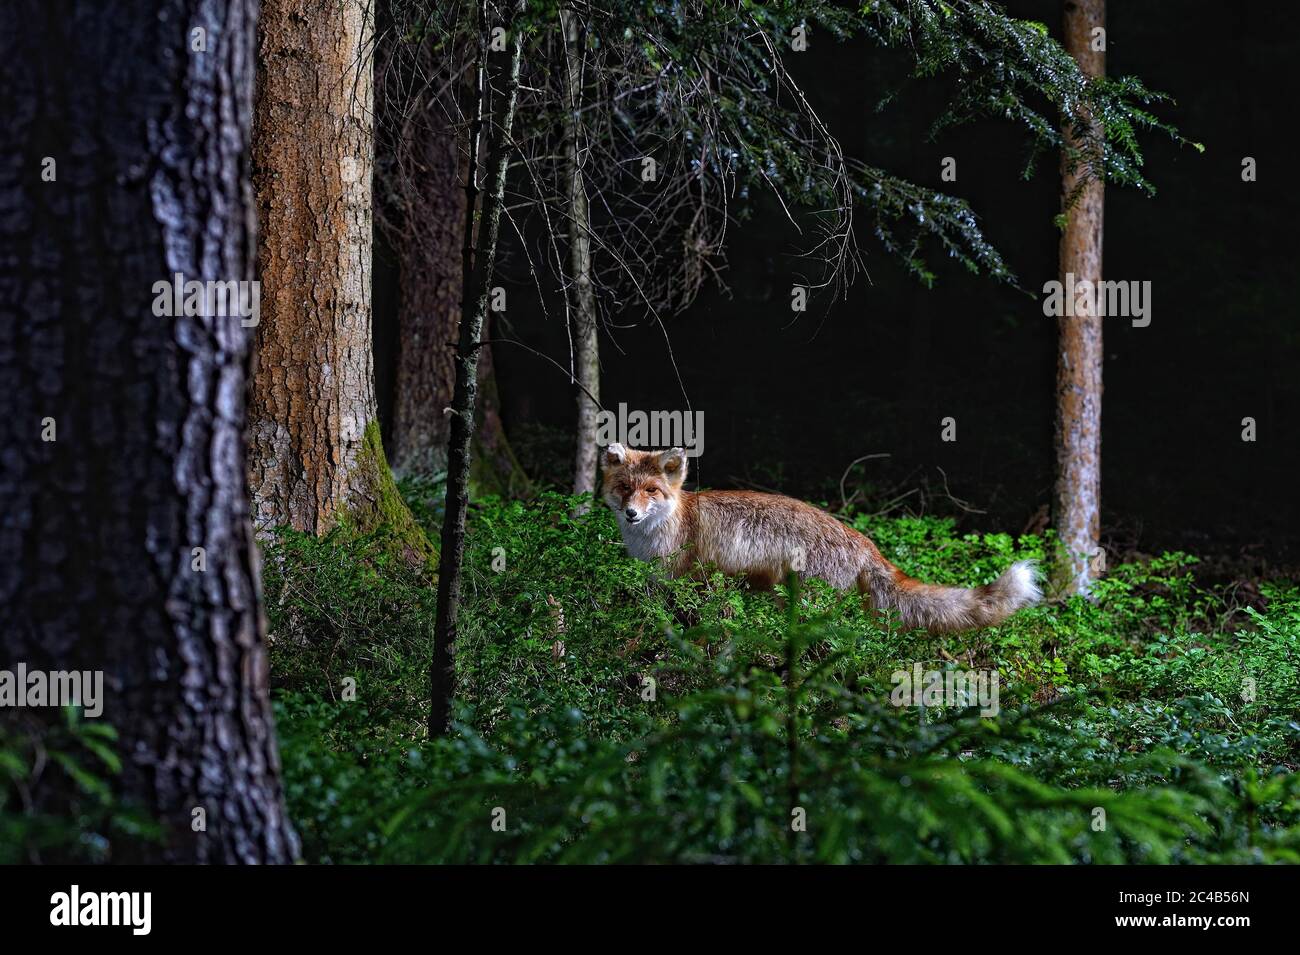 Rotfuchs (Vulpes vulpes), Tierpräparat, im Wald stehend, Deutschland Stockfoto